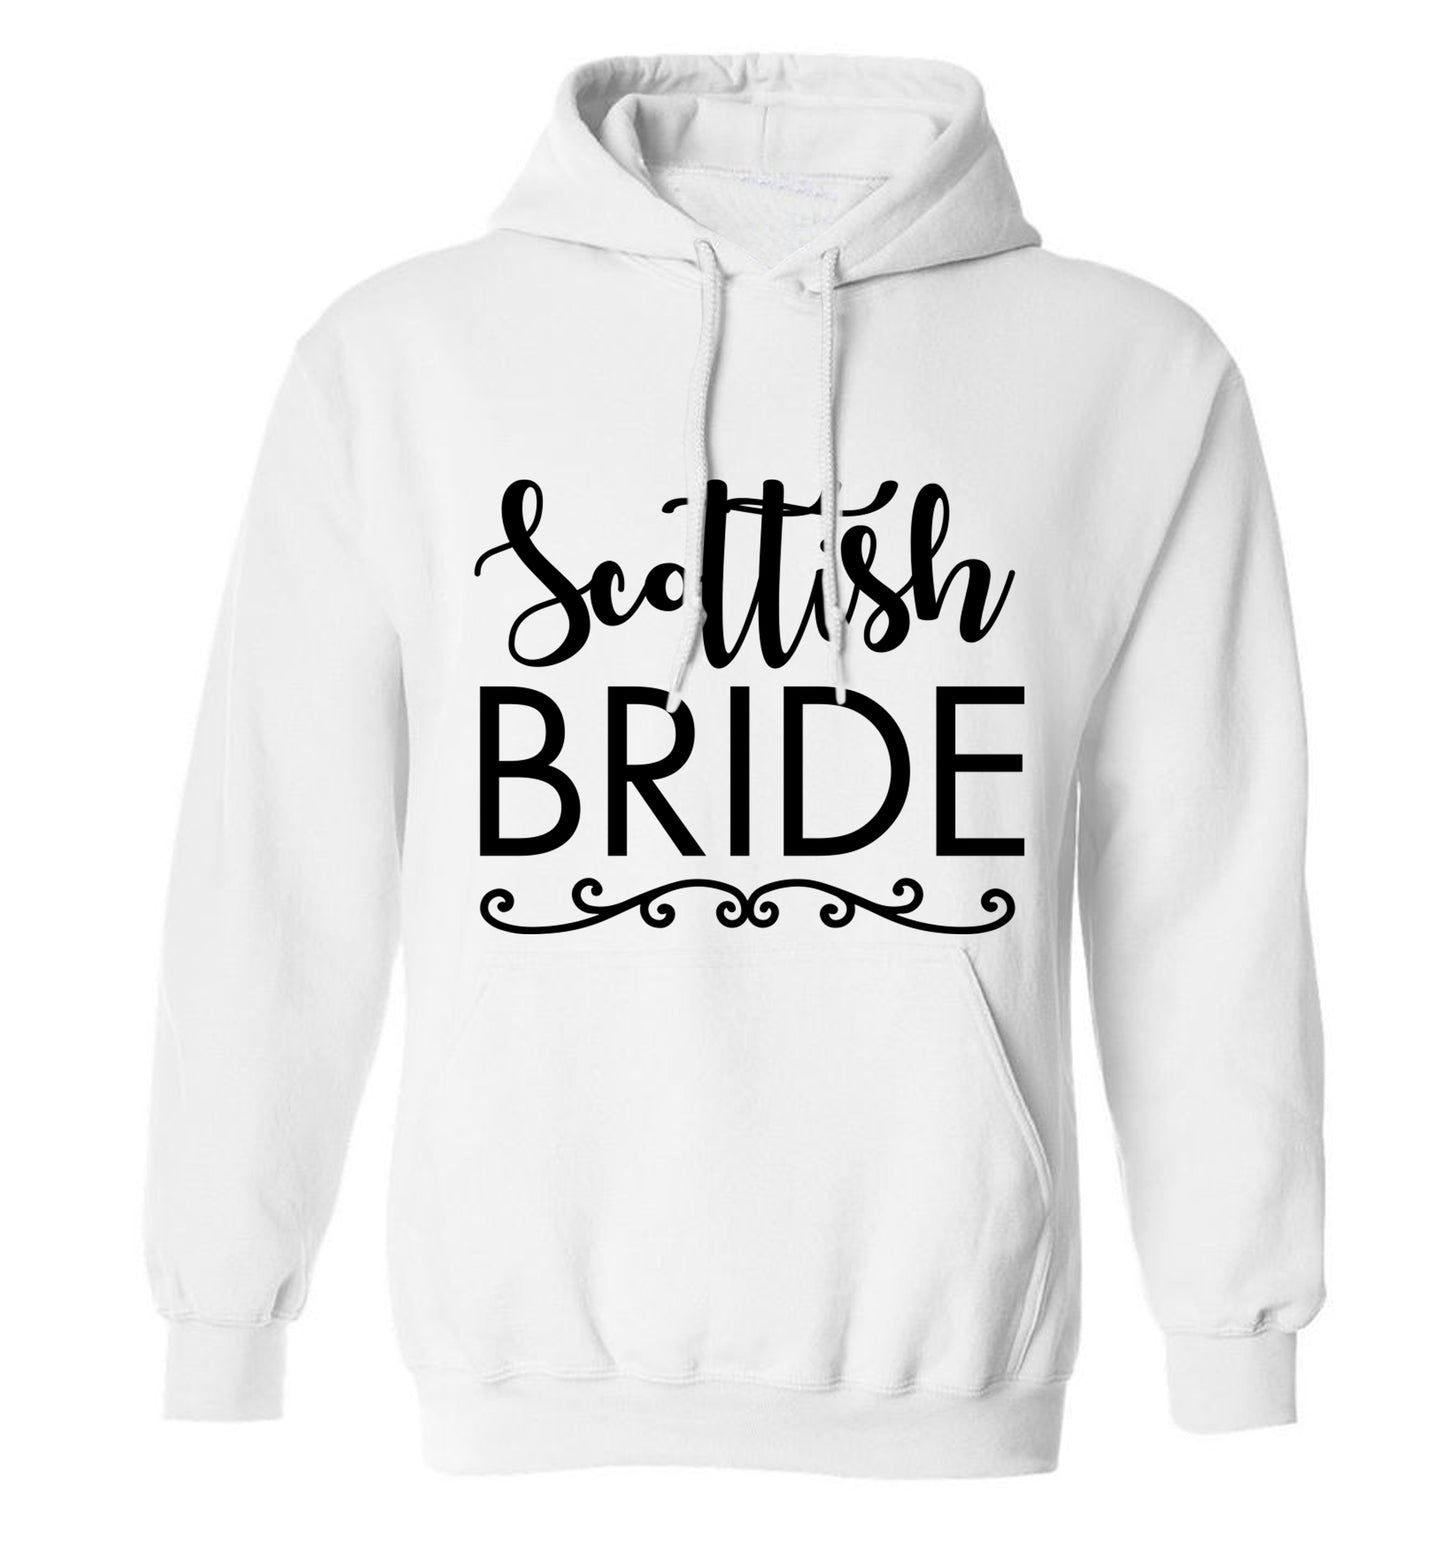 Scottish Bride adults unisex white hoodie 2XL